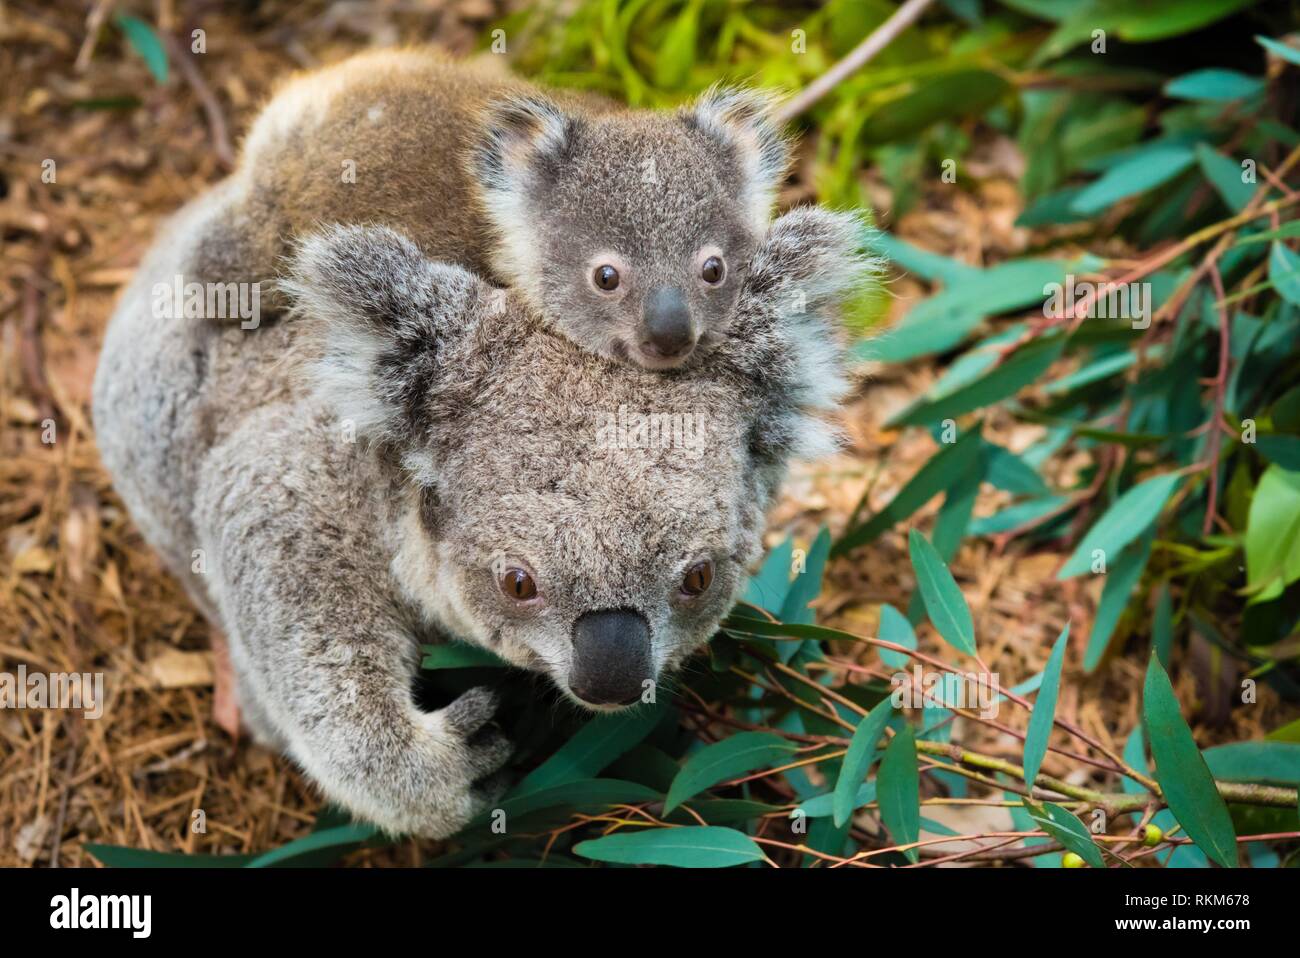 SET44 /OUT AUSTRALIEN Kinderzimmer Babyzimmer Bilder Koala Känguru Poster Tiere 